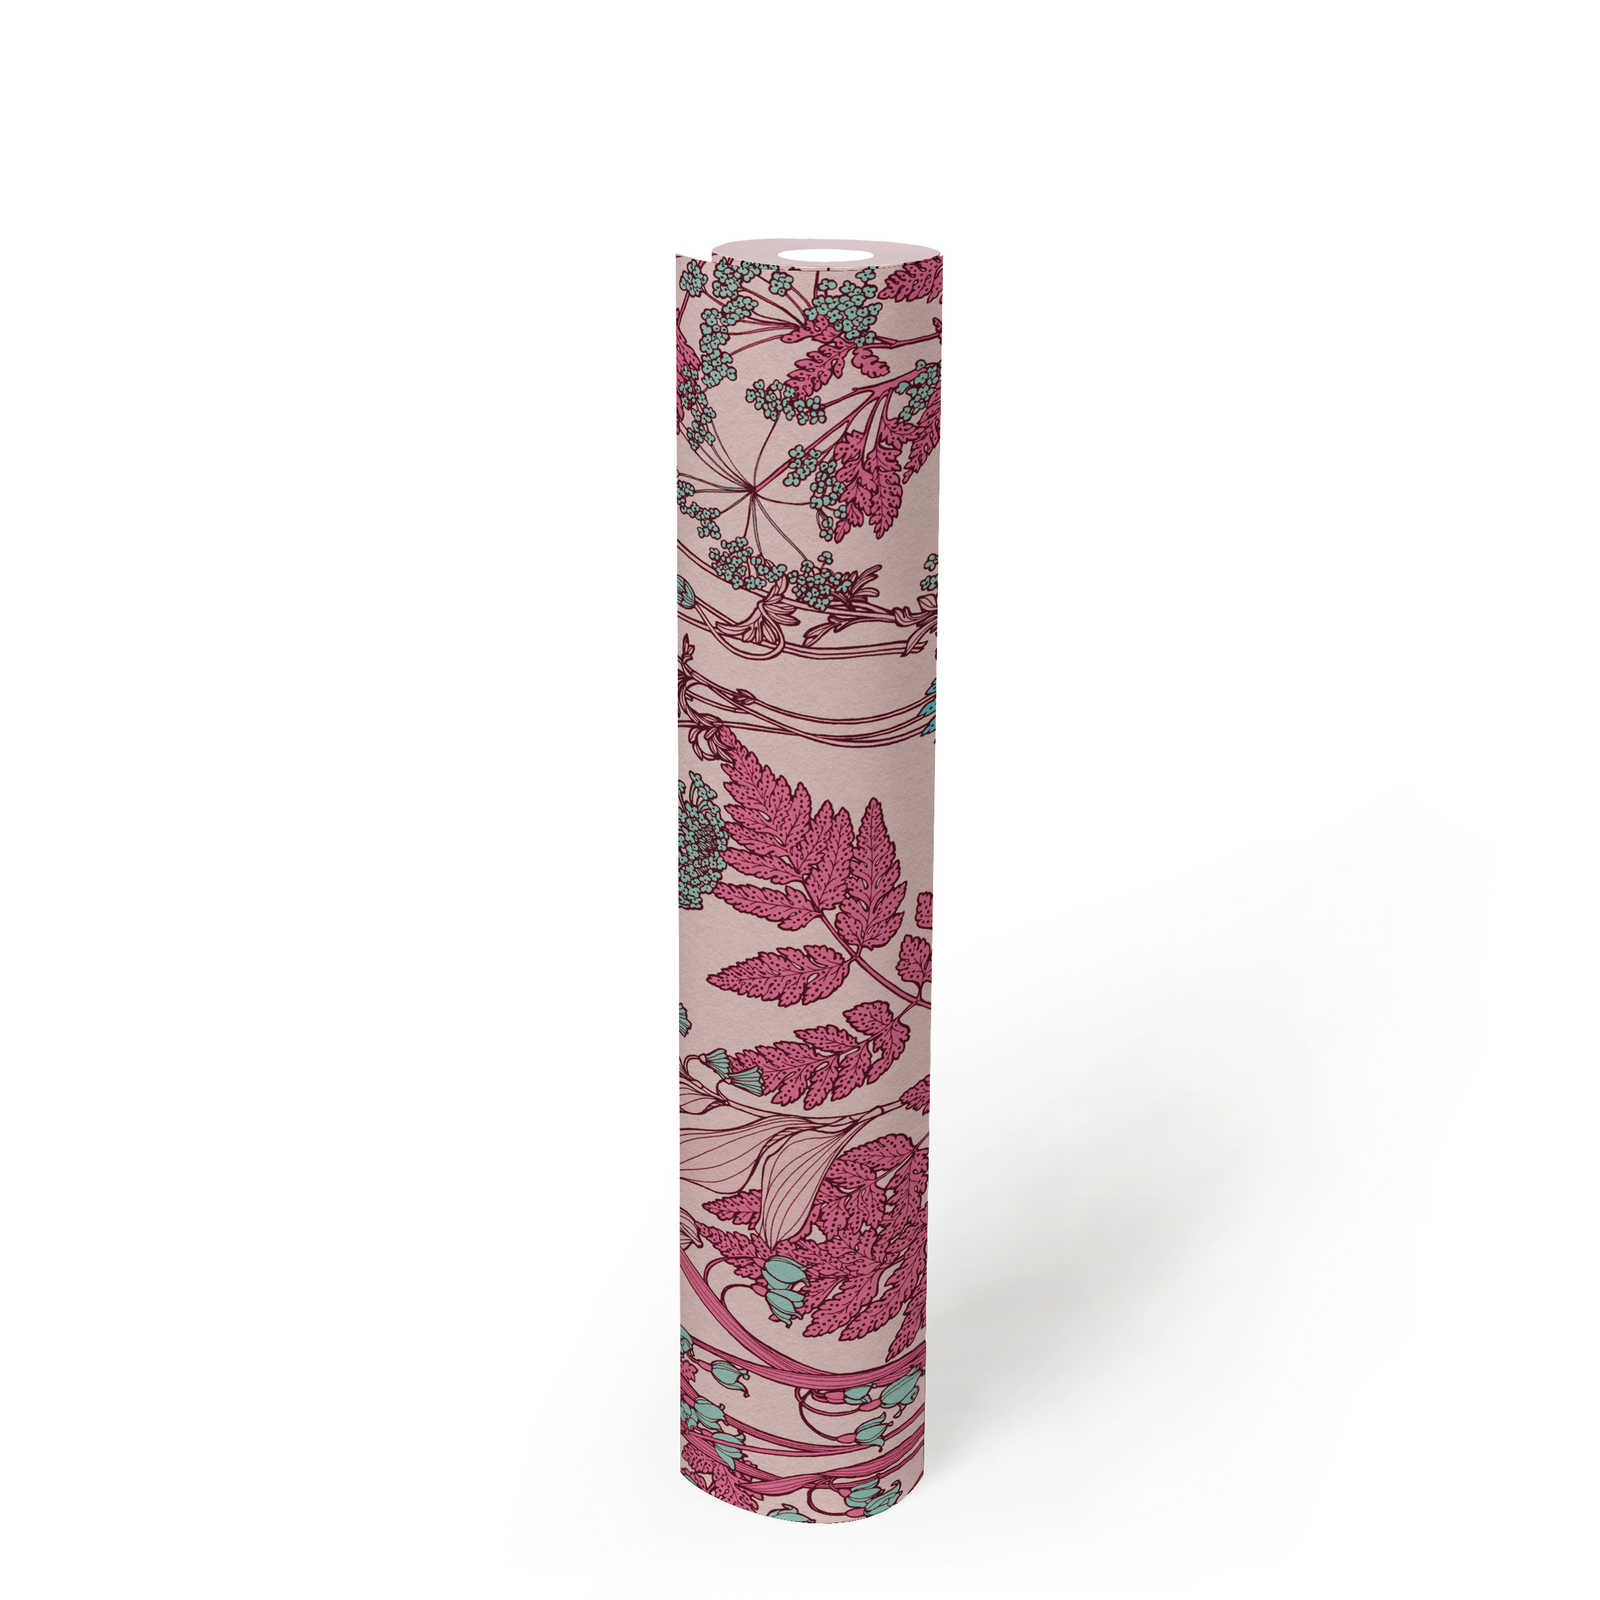             Papel pintado floral rosa con diseño floral en estilo botánico - rosa, rojo, azul
        